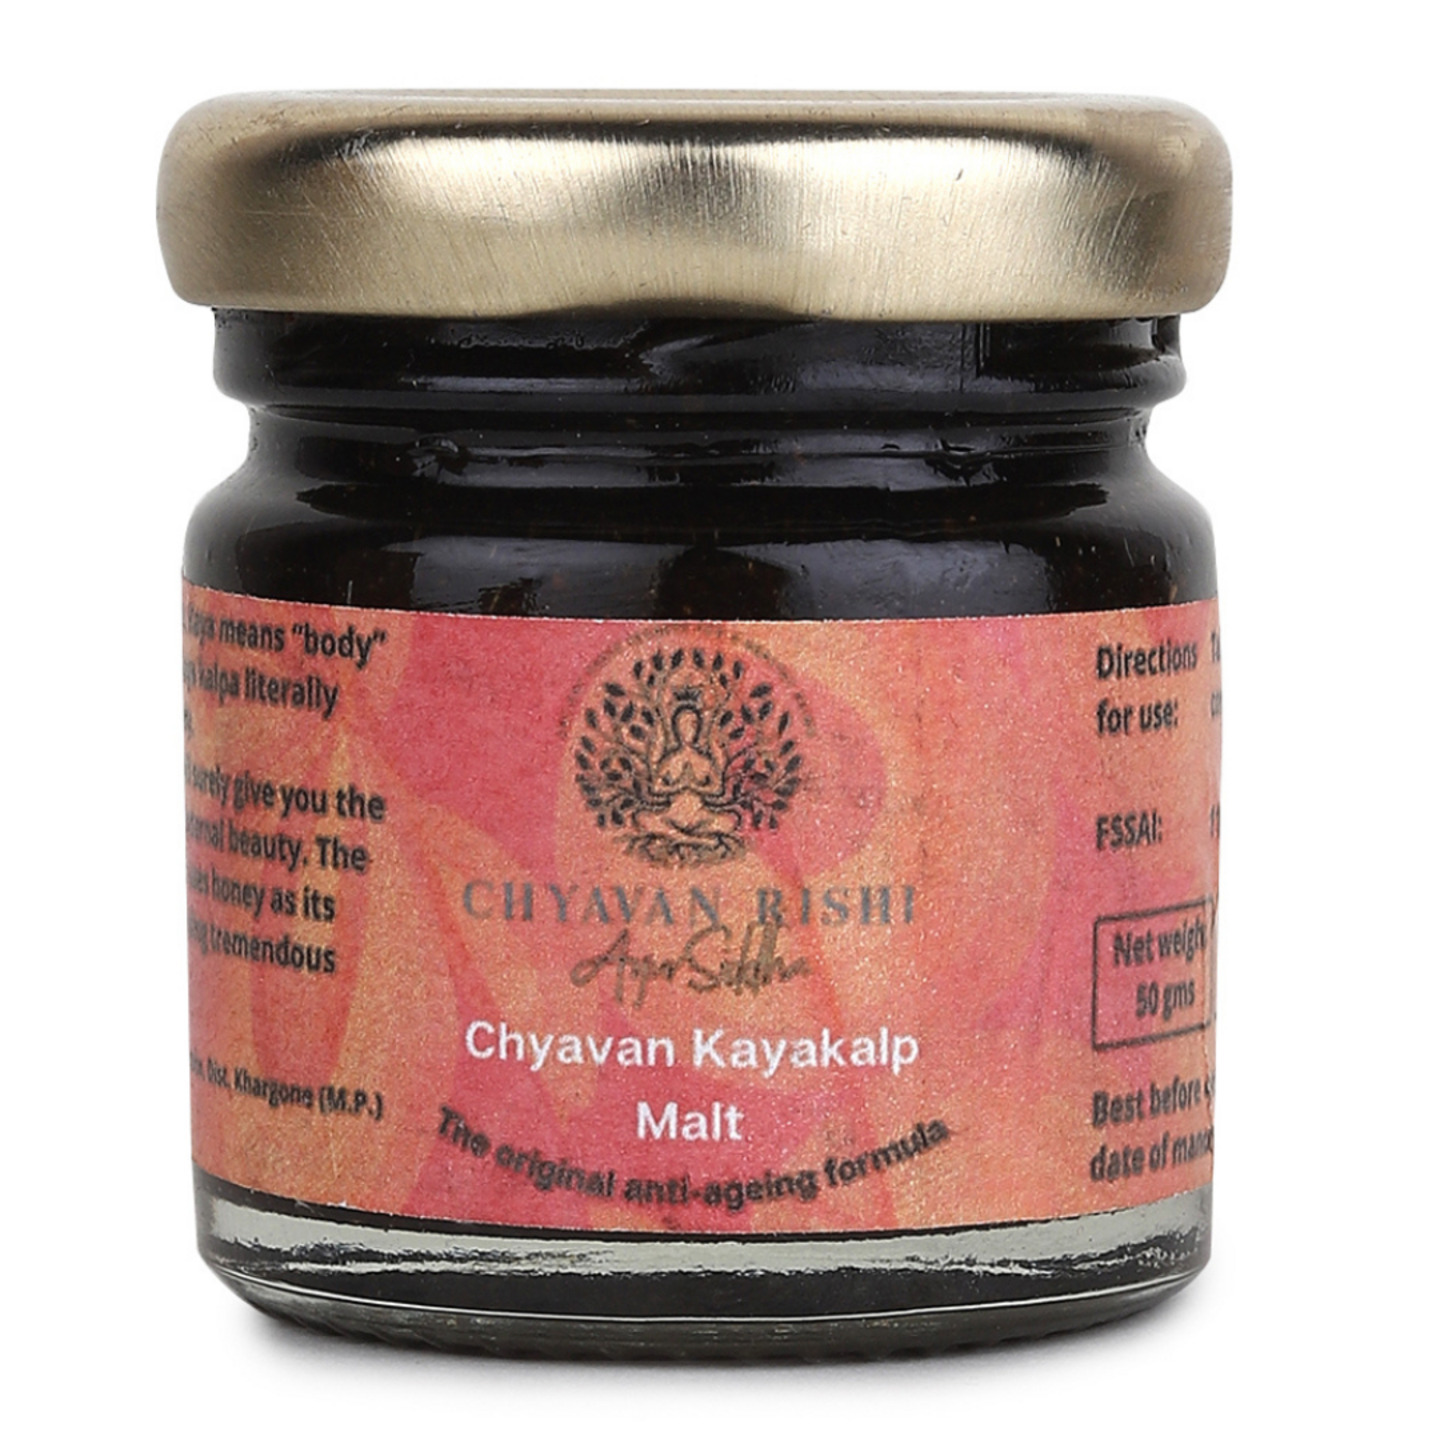 Chyavan KayaKalp Malt bottle - the best ayurvedic immunity booster